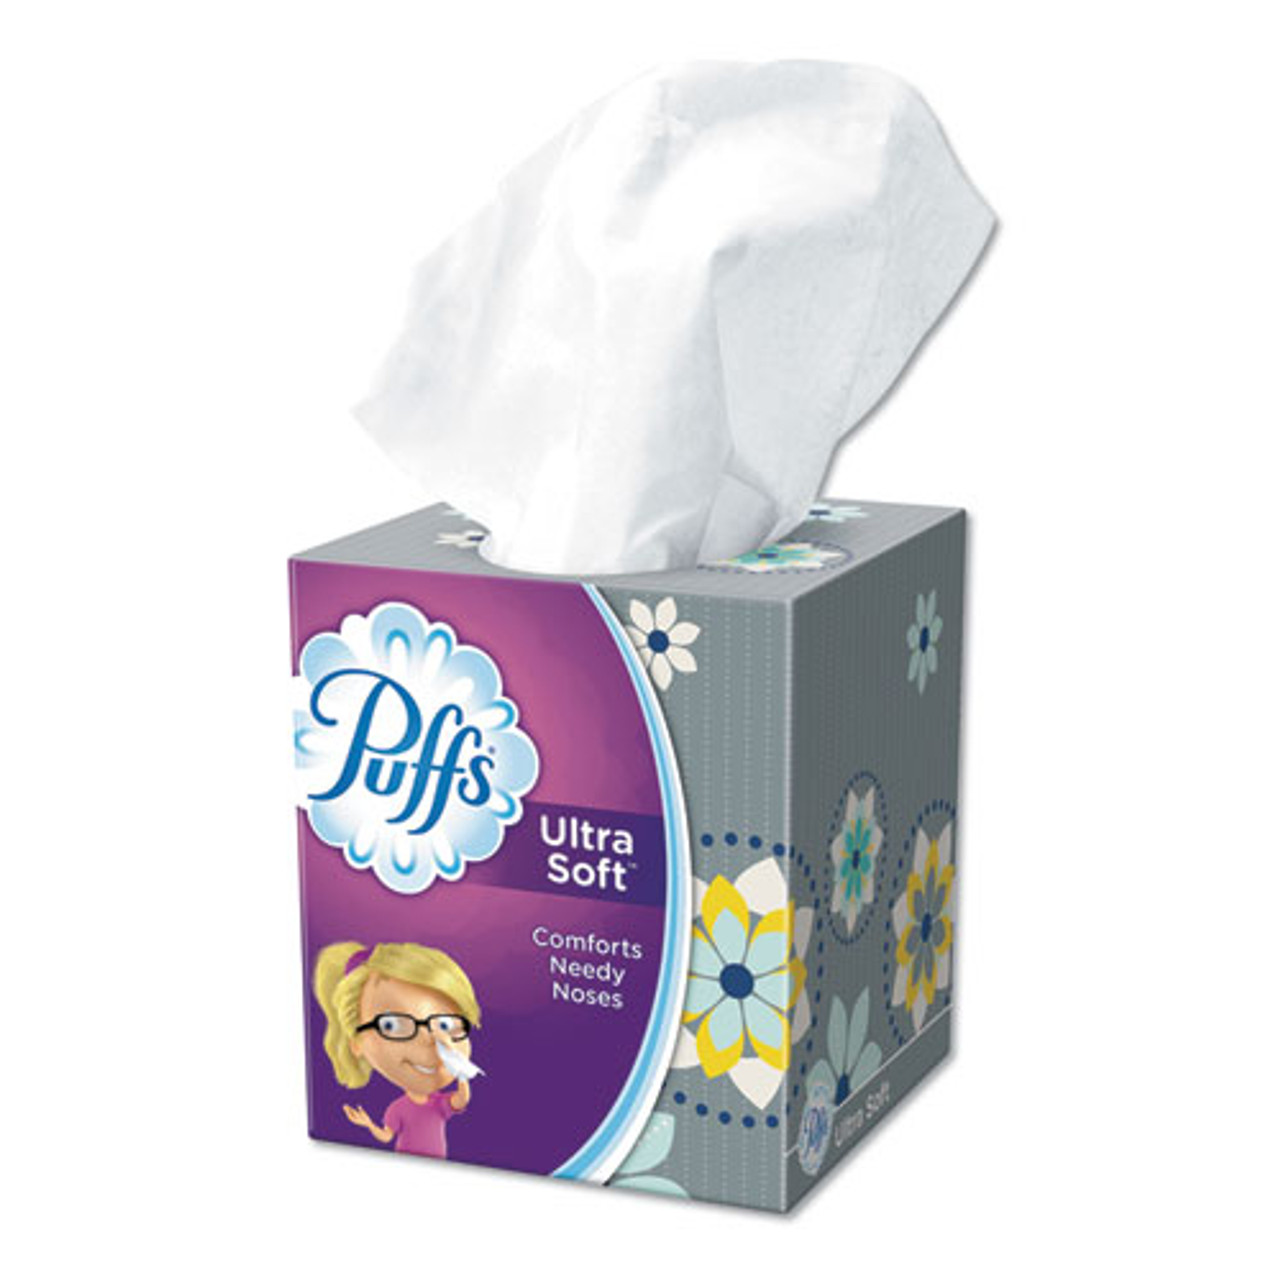 Puffs Plus Lotion Facial Tissue, 1-Ply, White, 56 Sheets/Box, 24 Boxes/Carton